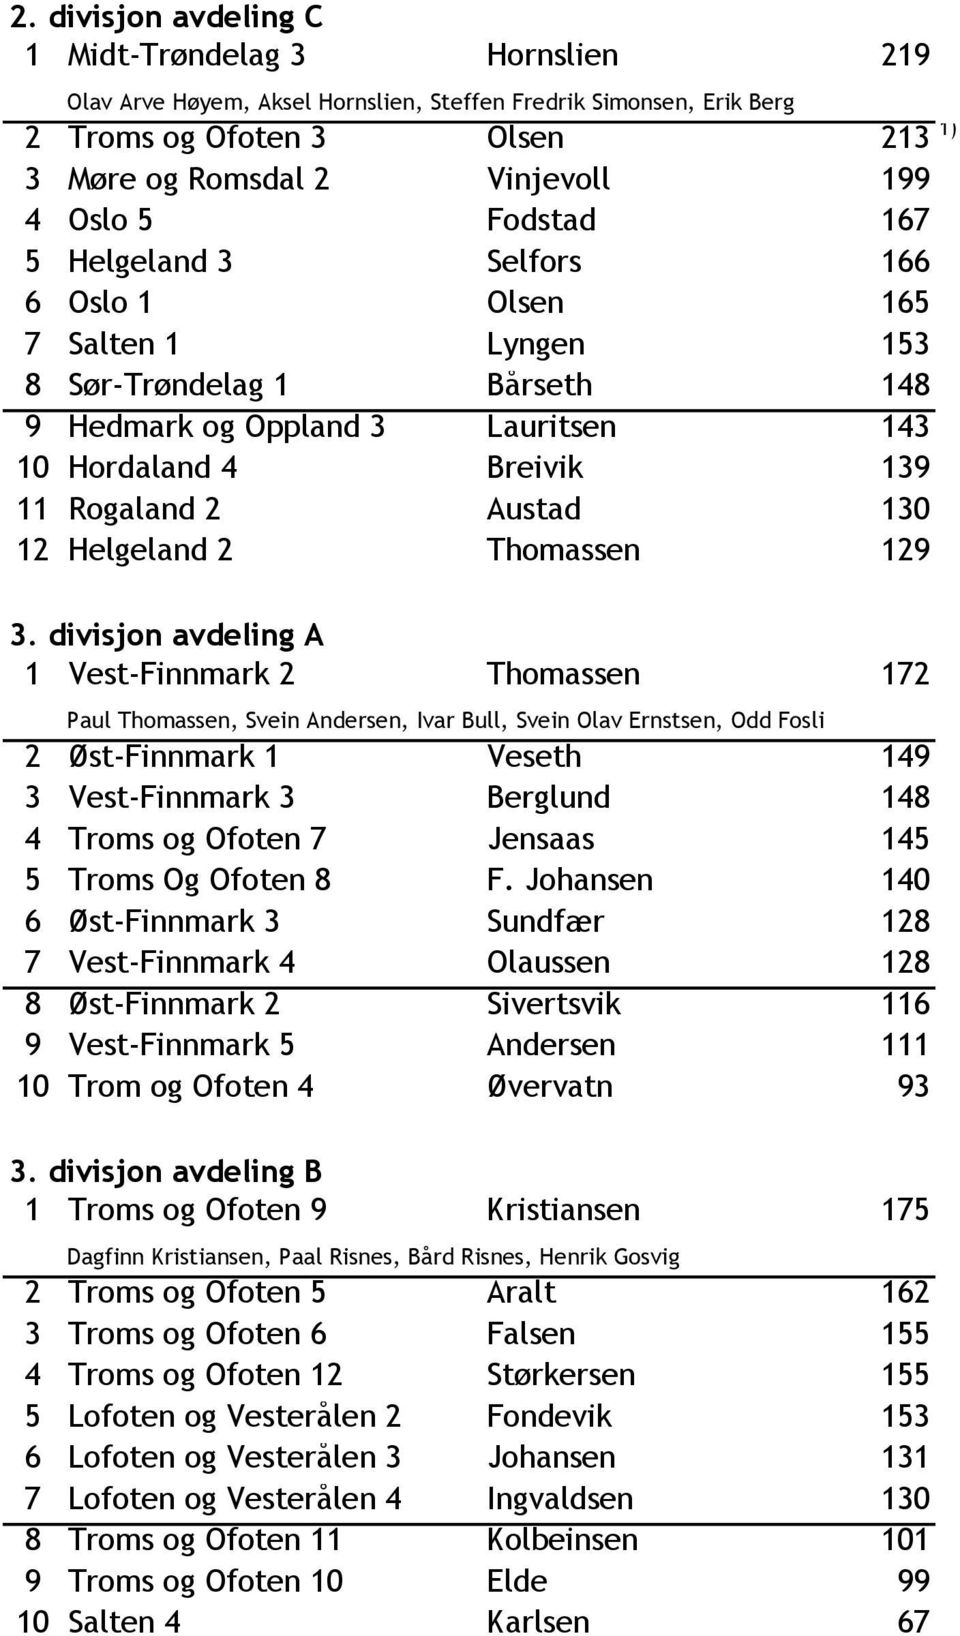 12 Helgeland 2 Thomassen 129 3.